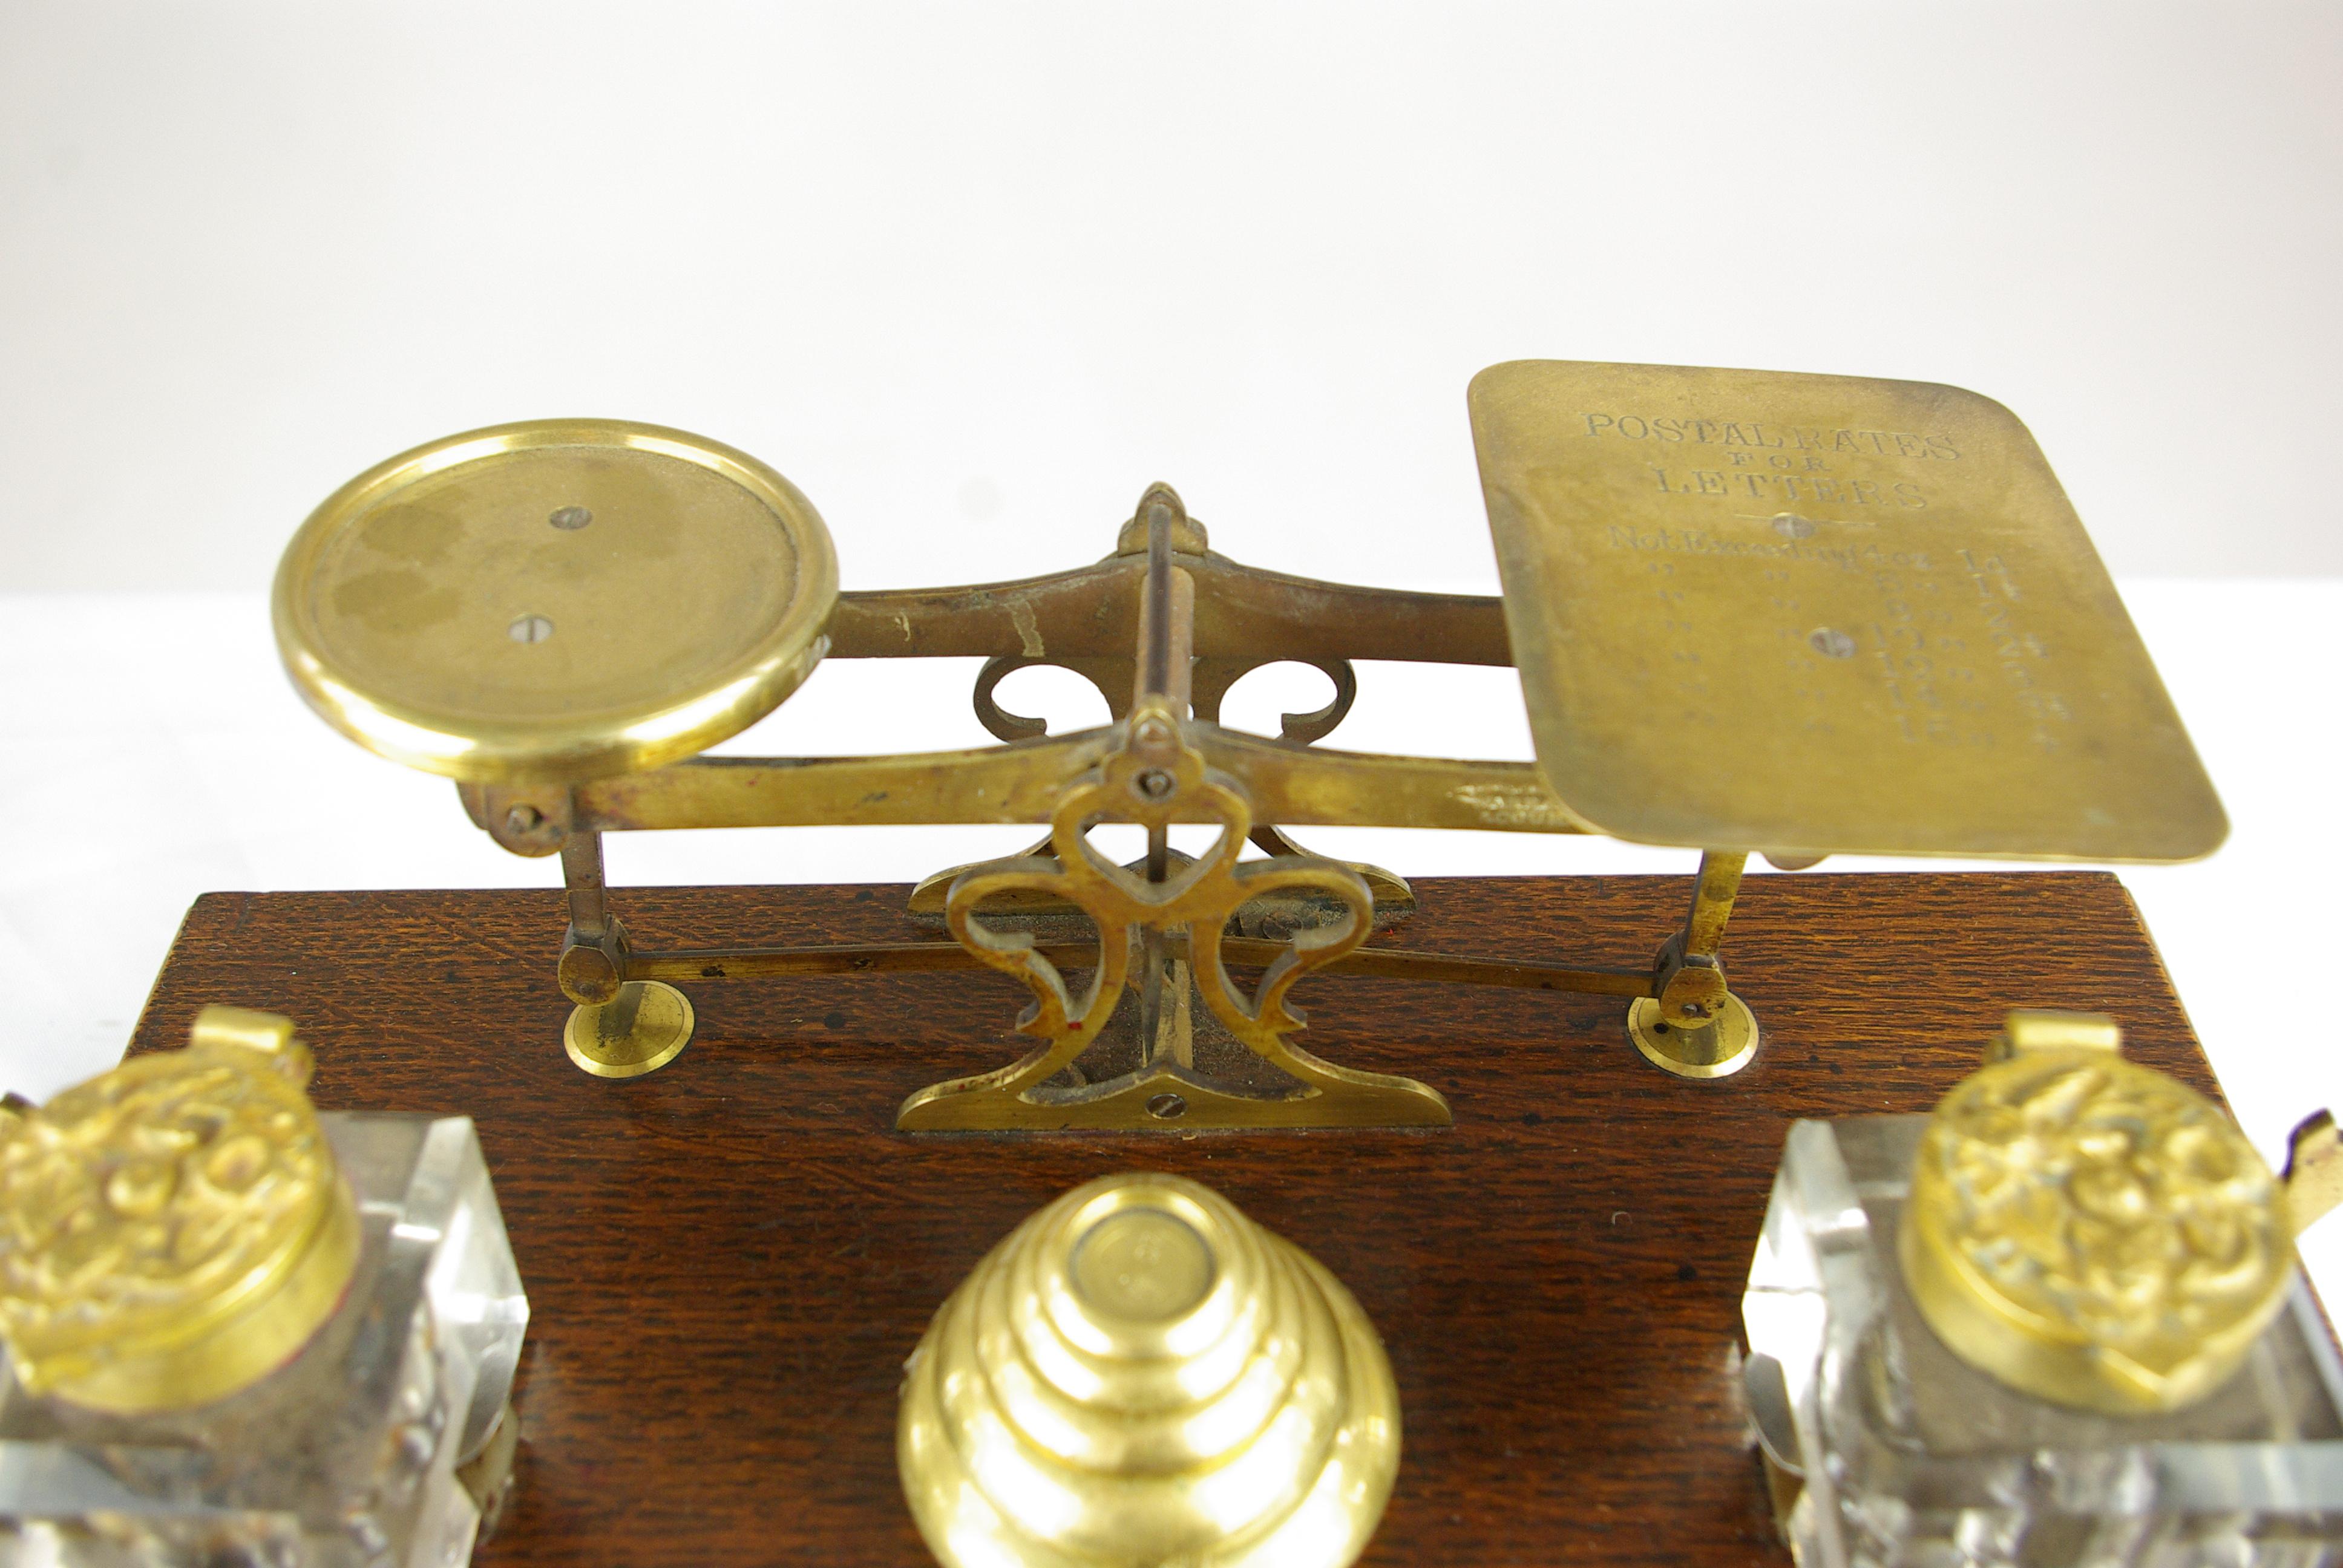 Antique Desk Set, Scottish Victorian Inkstand, Postal Scale, and Weights, B1430C 2